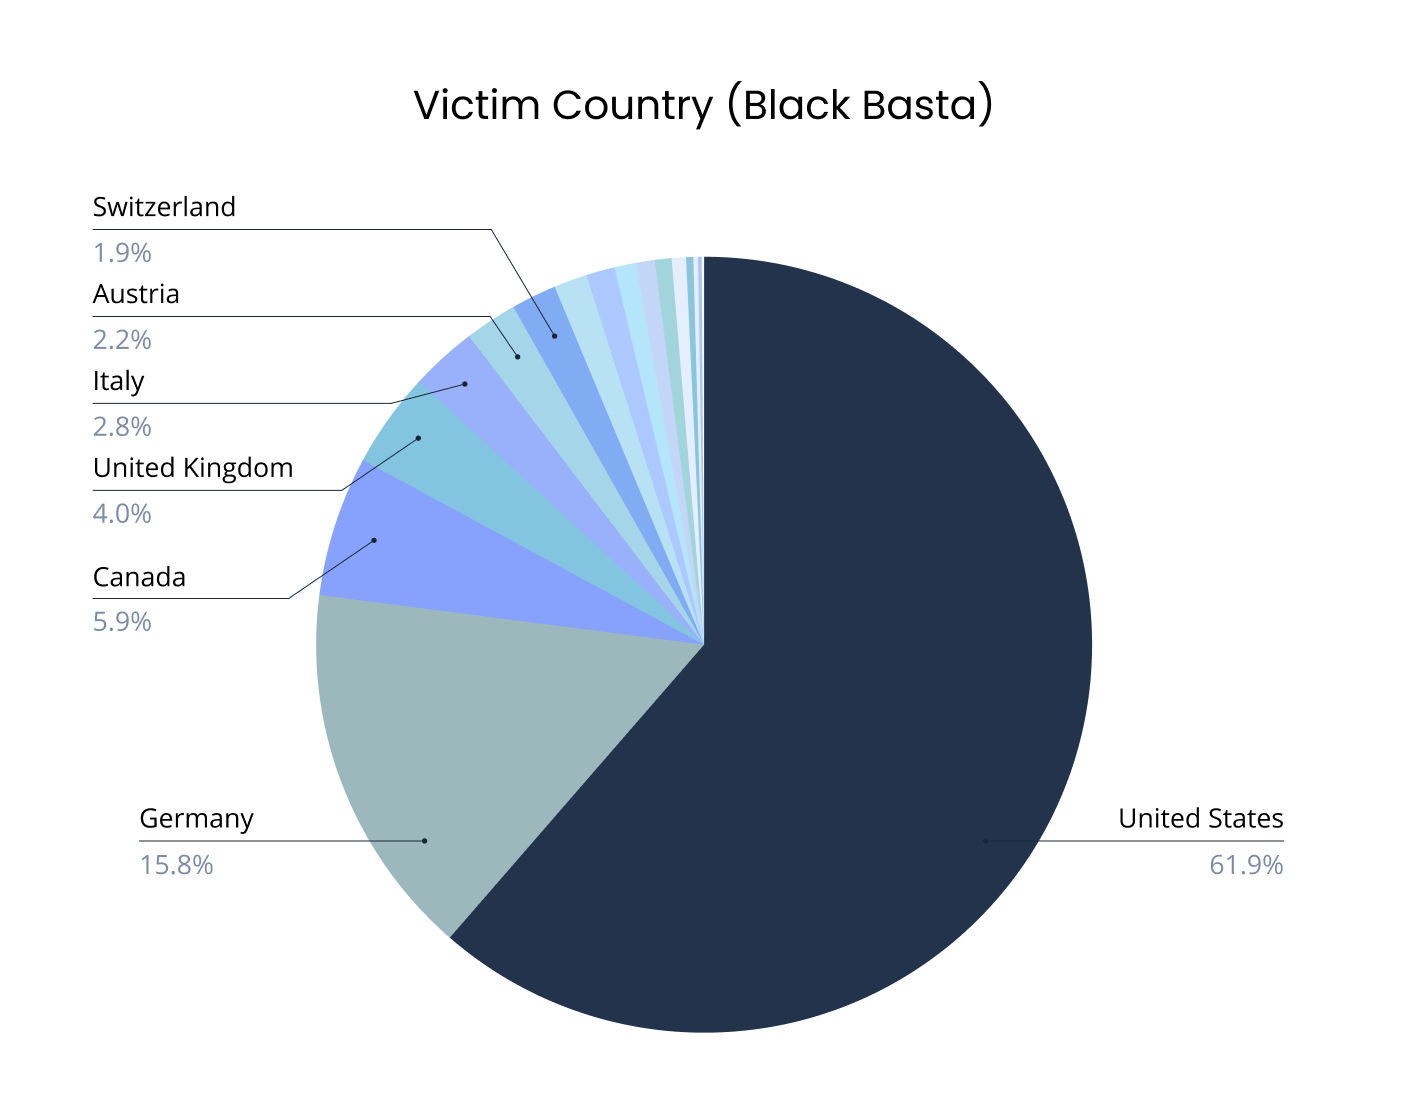 [PIE CHART] Victim Countries (Black Basta)